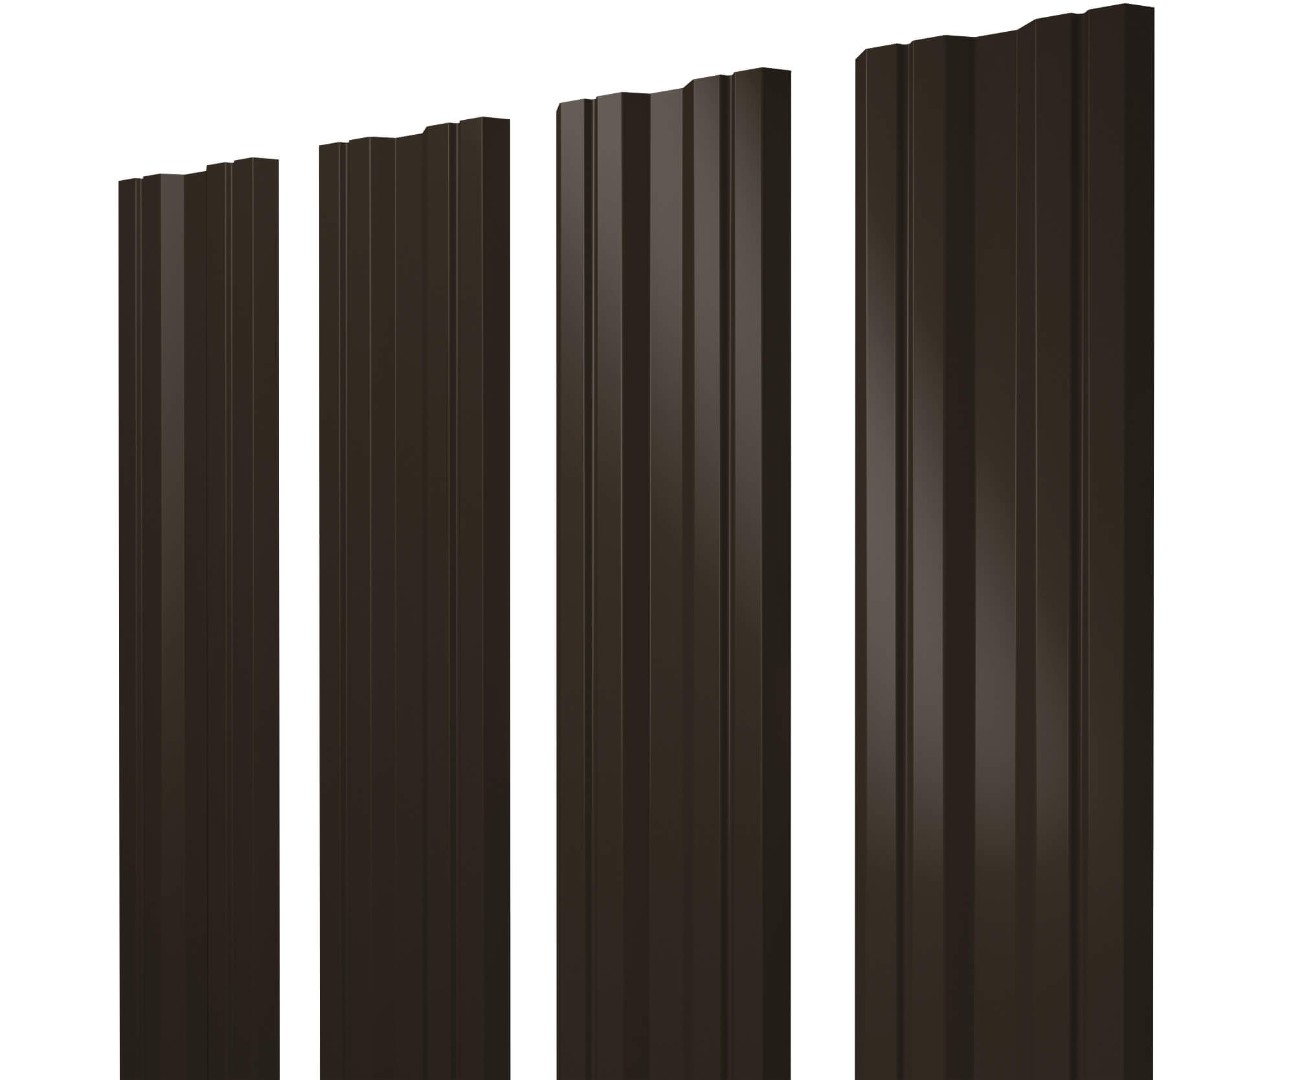 Штакетник Twin 0,5 Quarzit RR 32 темно-коричневый